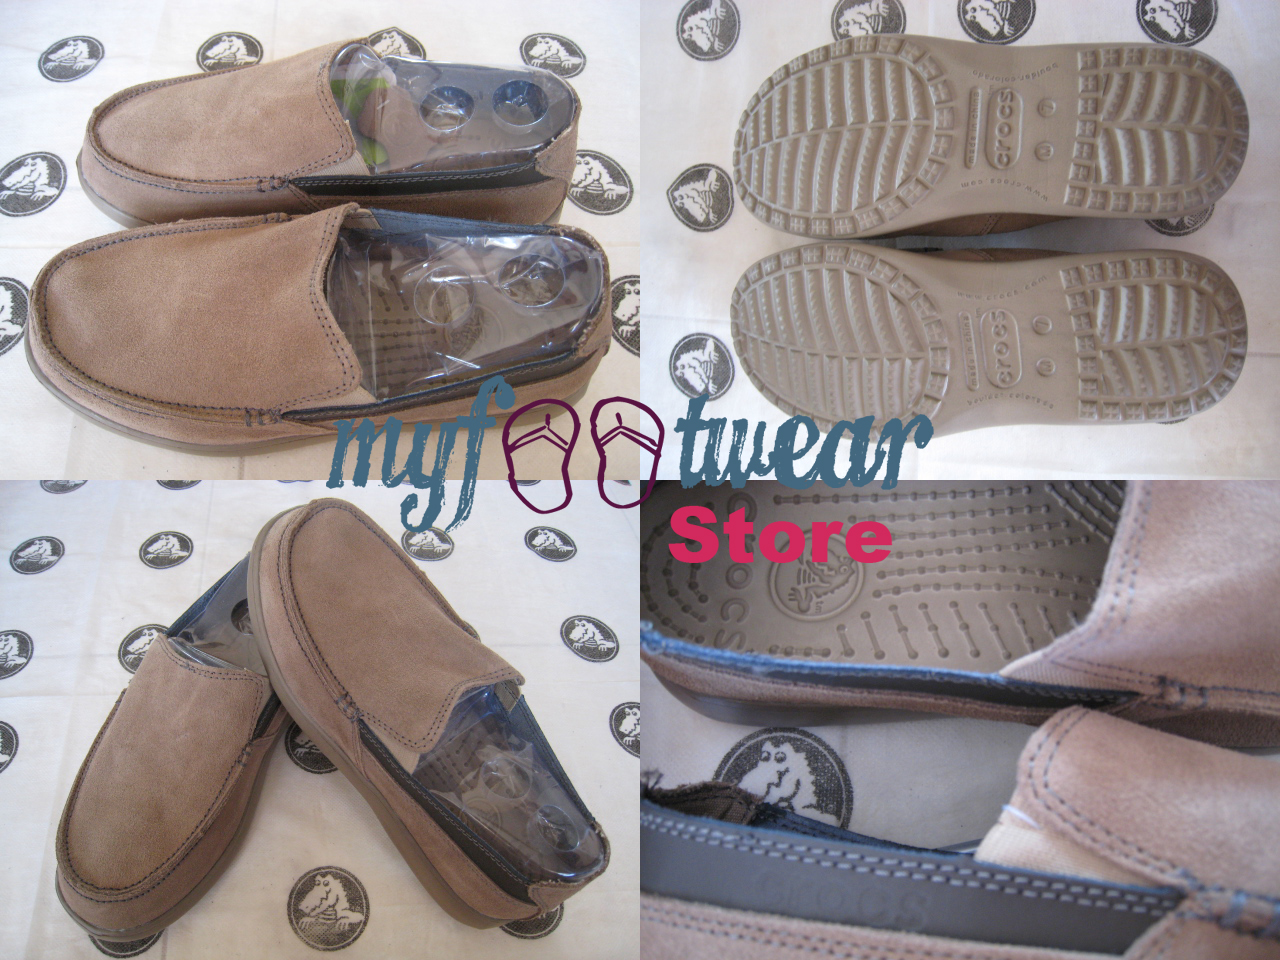 MyFootWearStore Pusat Sepatu  Crocs  Murah  Surabaya 